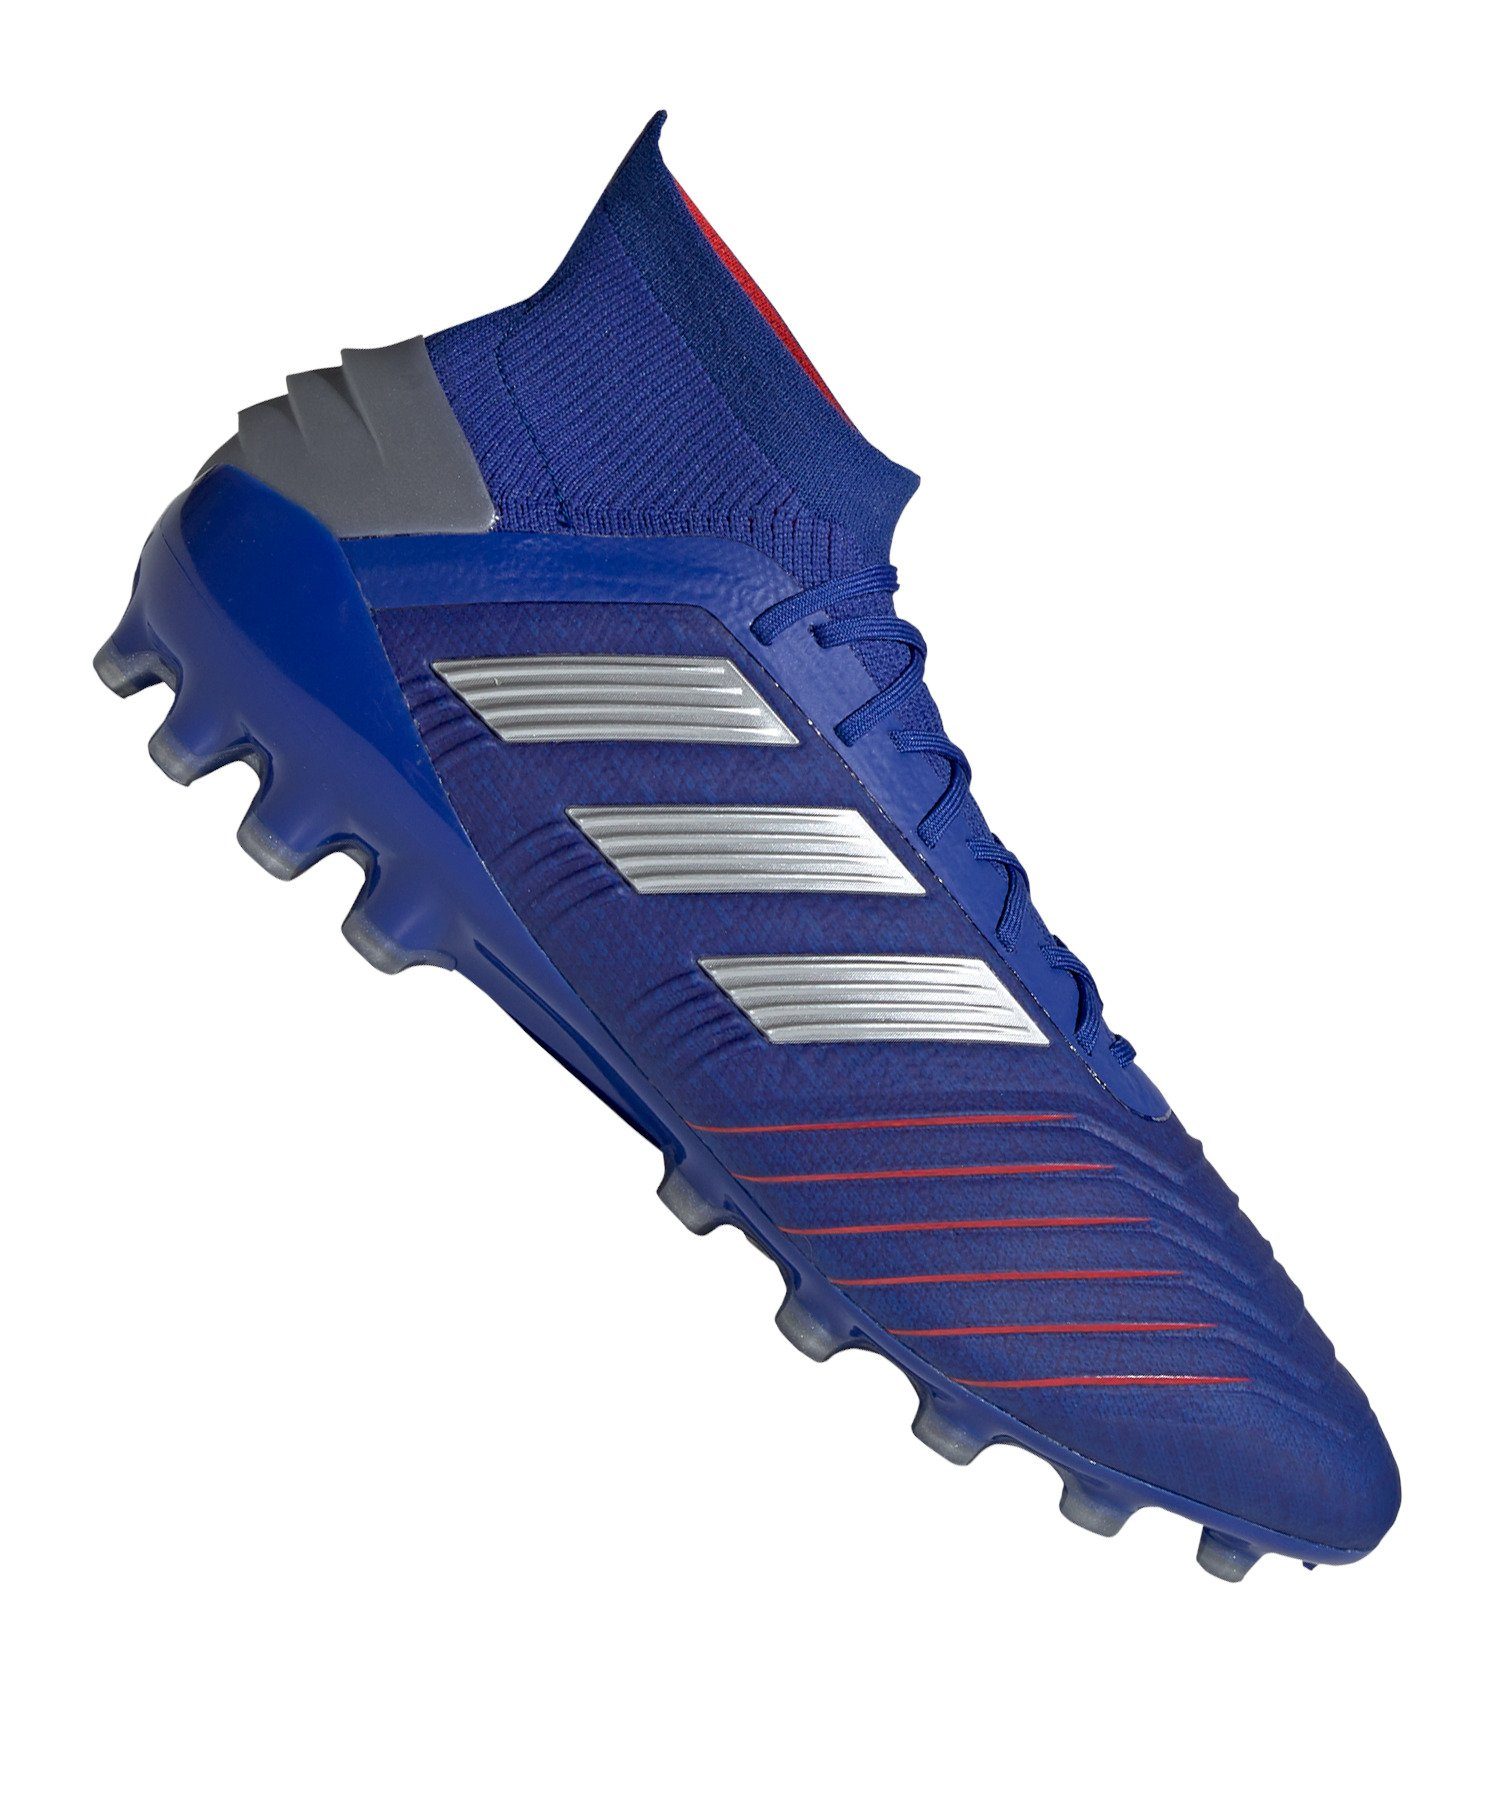 adidas Performance »Predator 19.1 AG« Fußballschuh | OTTO